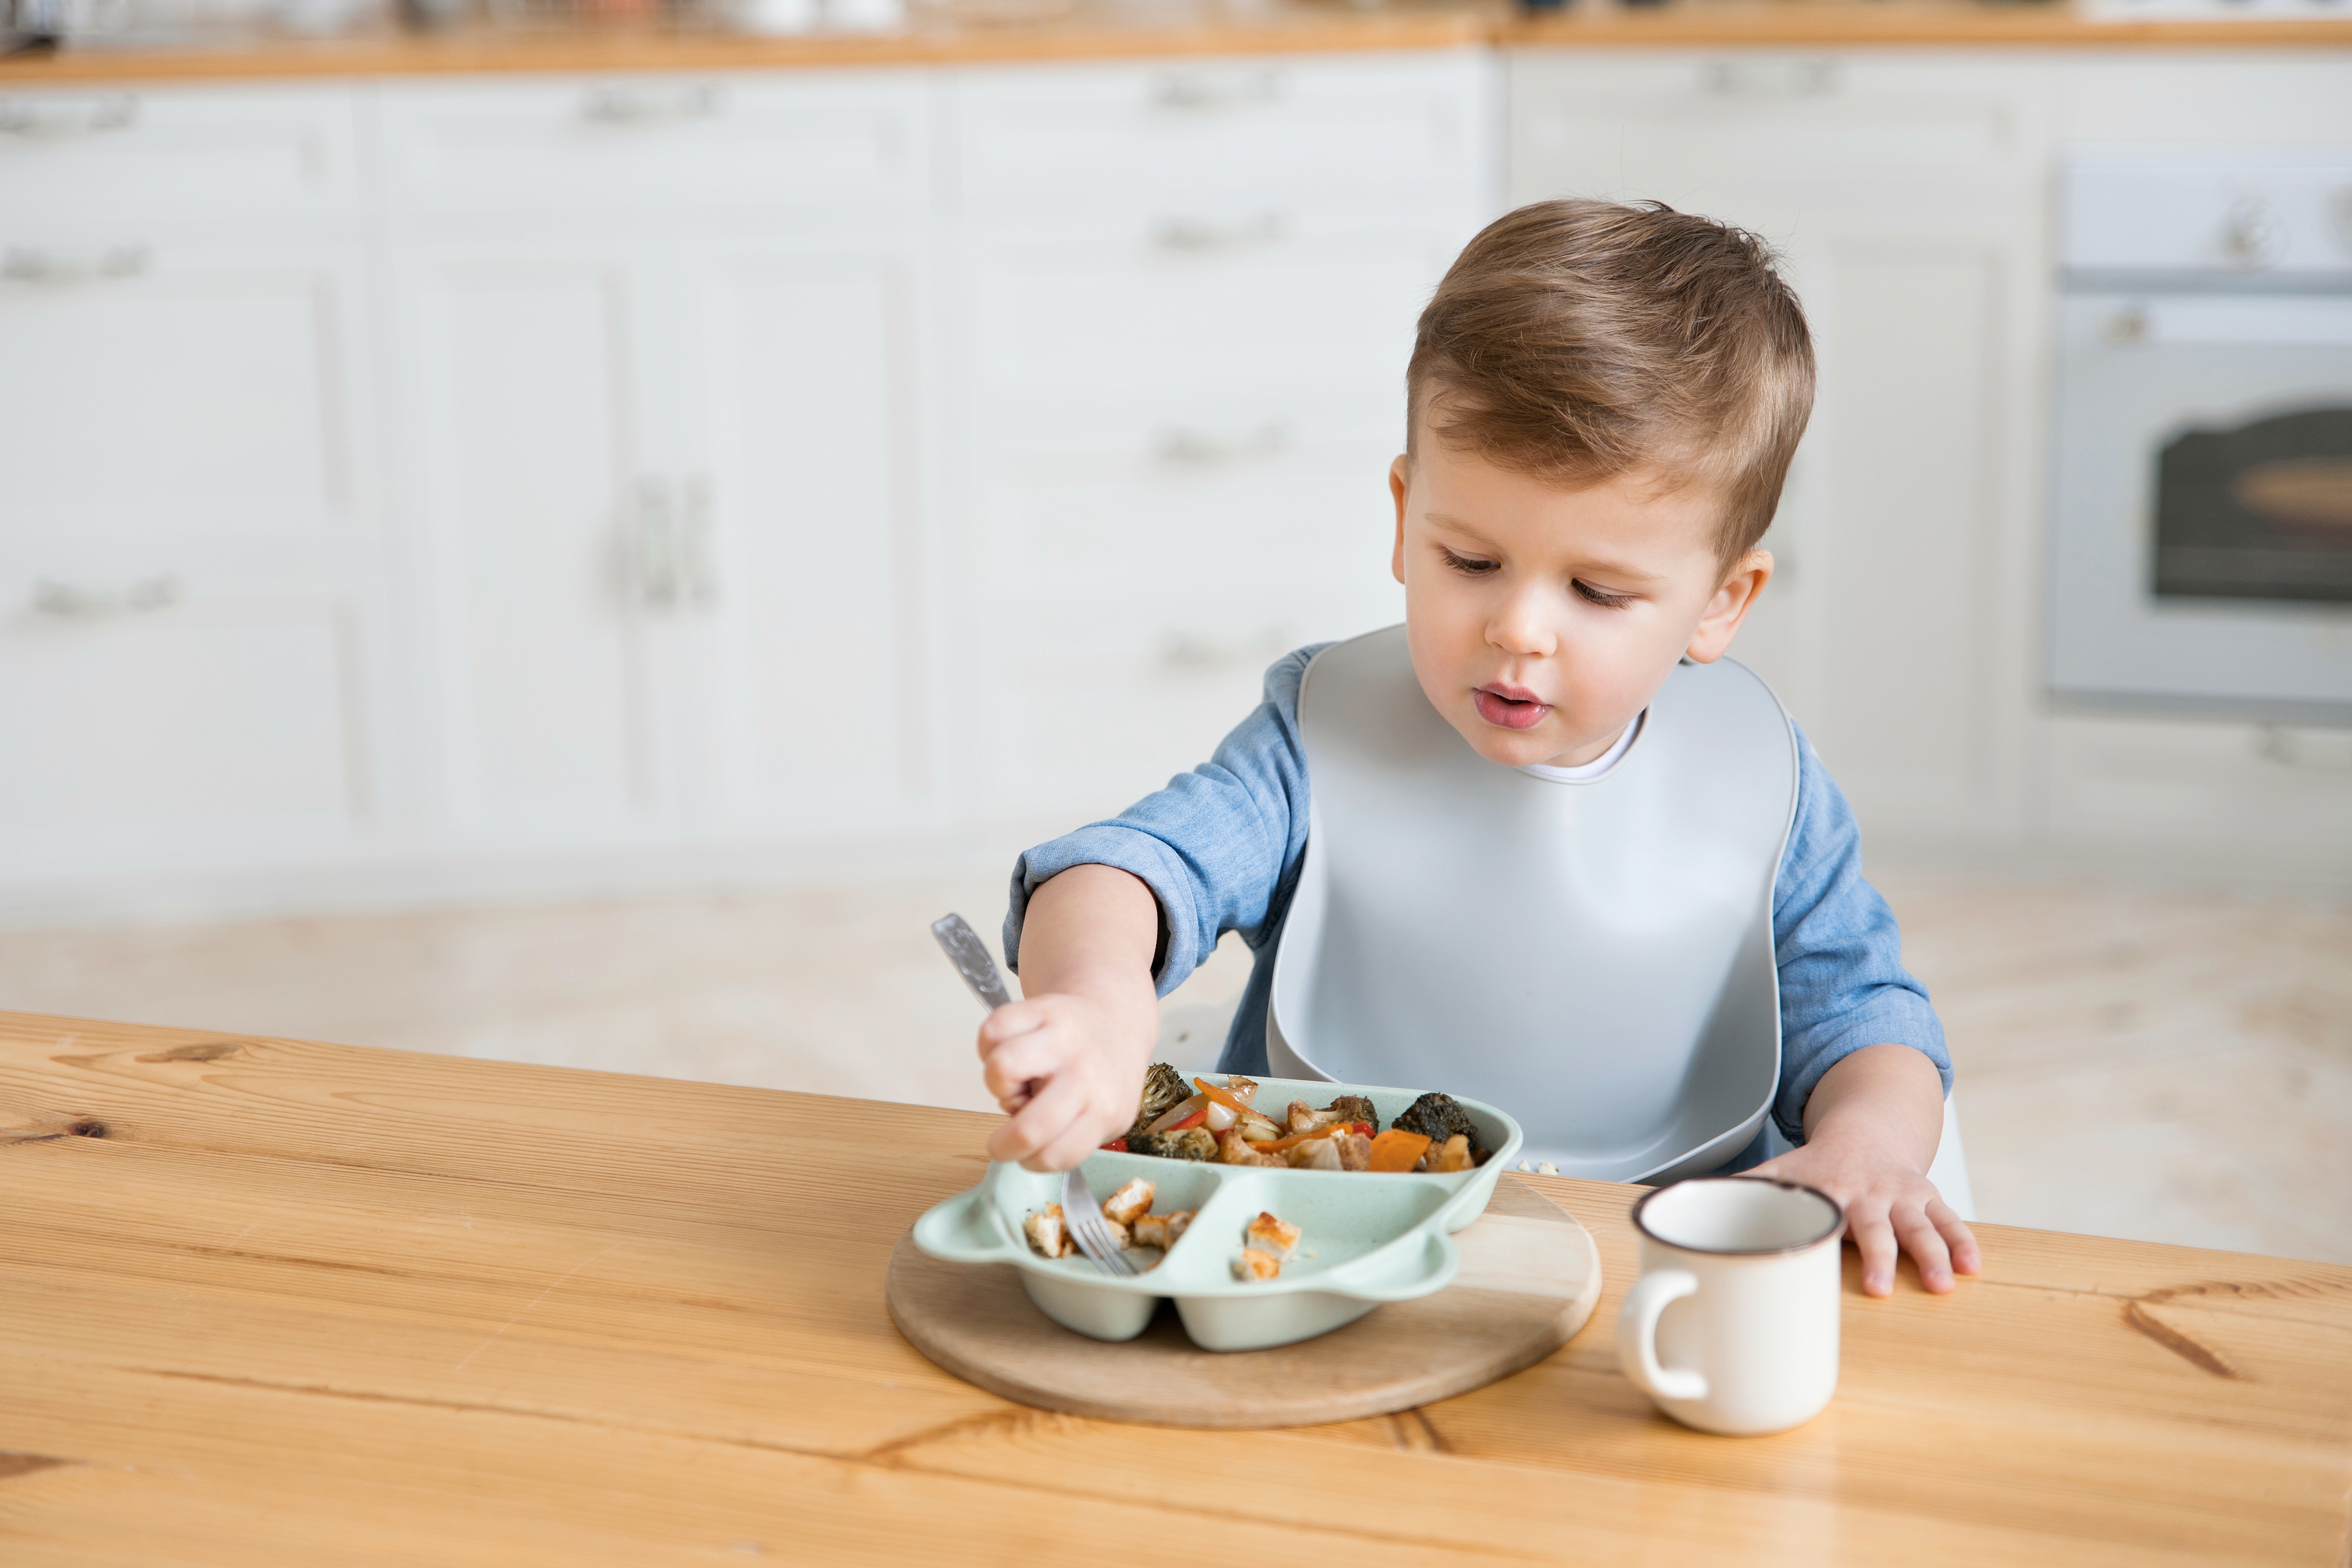 Toddler eating while wearing a bib | Source: Shutterstock